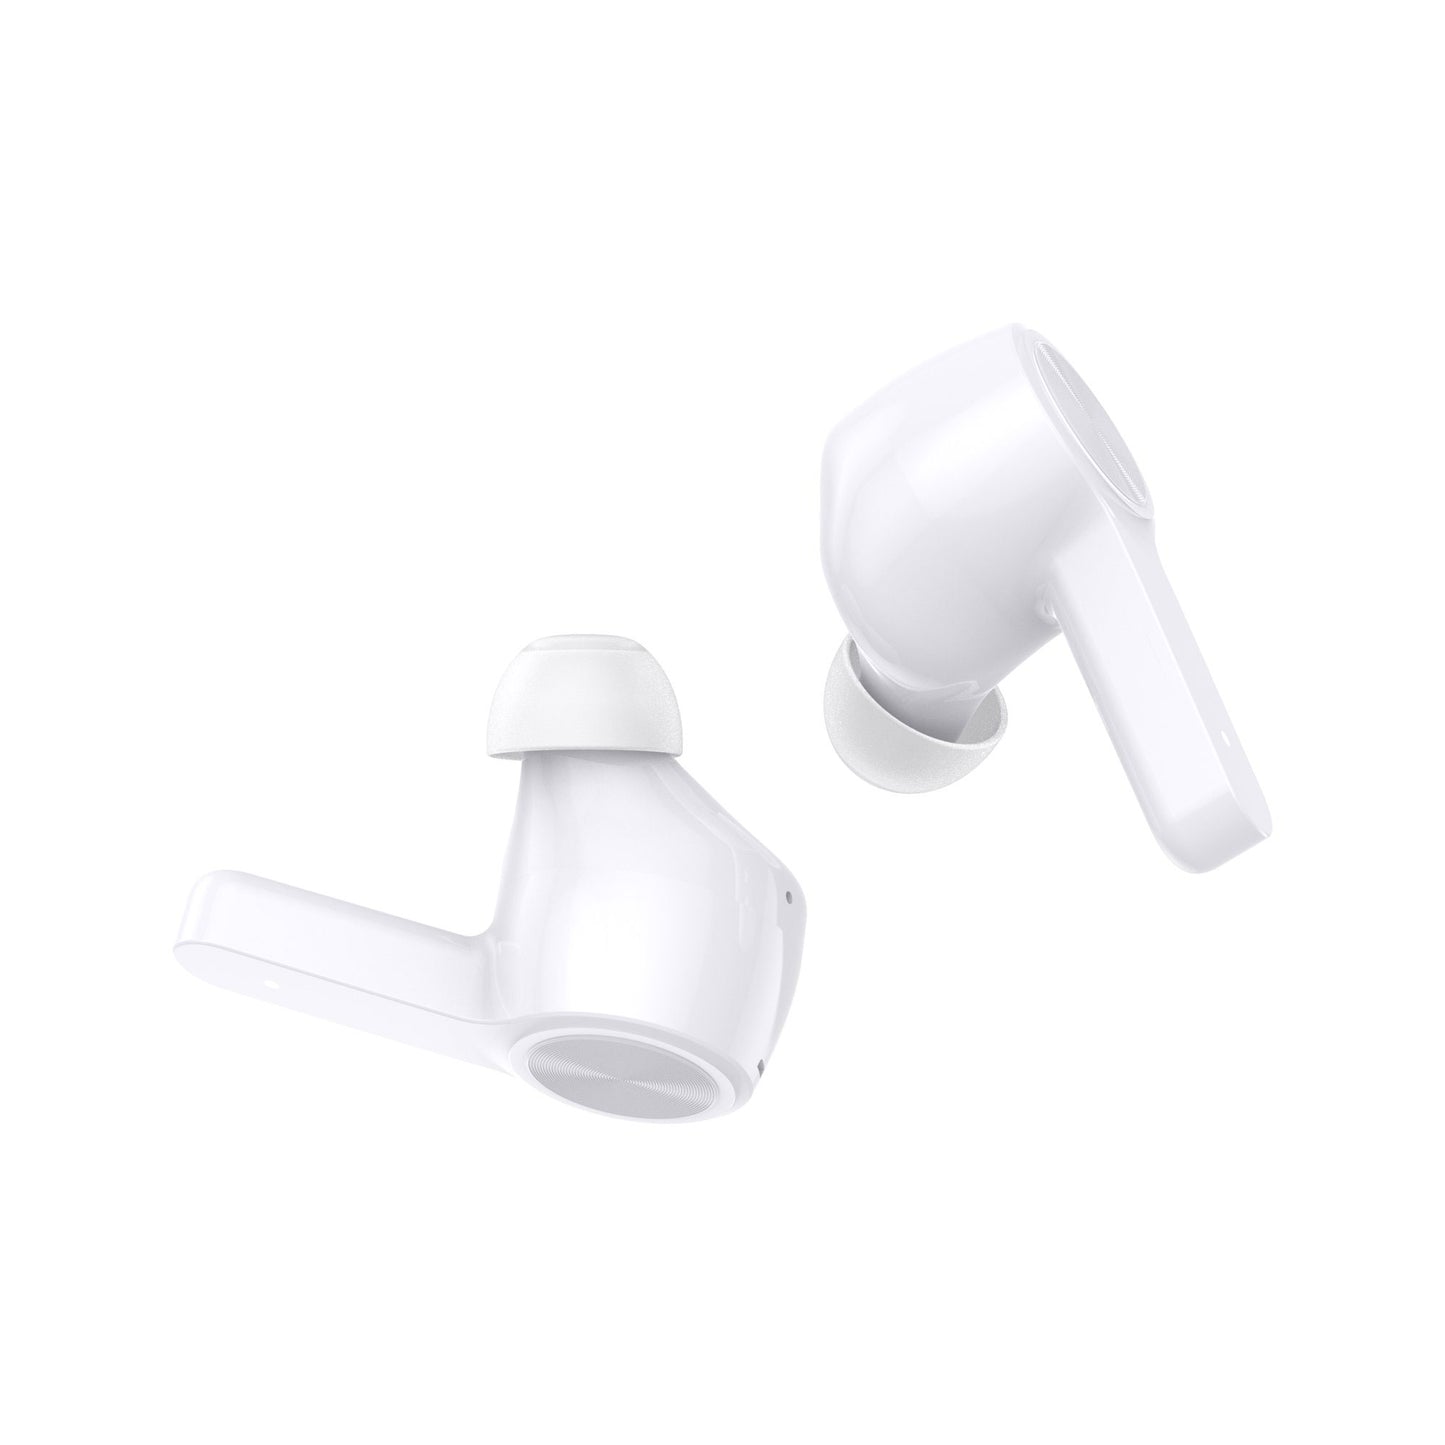 TWS Earphones, Headset True Stereo Headphones Earbuds Wireless - NWY08